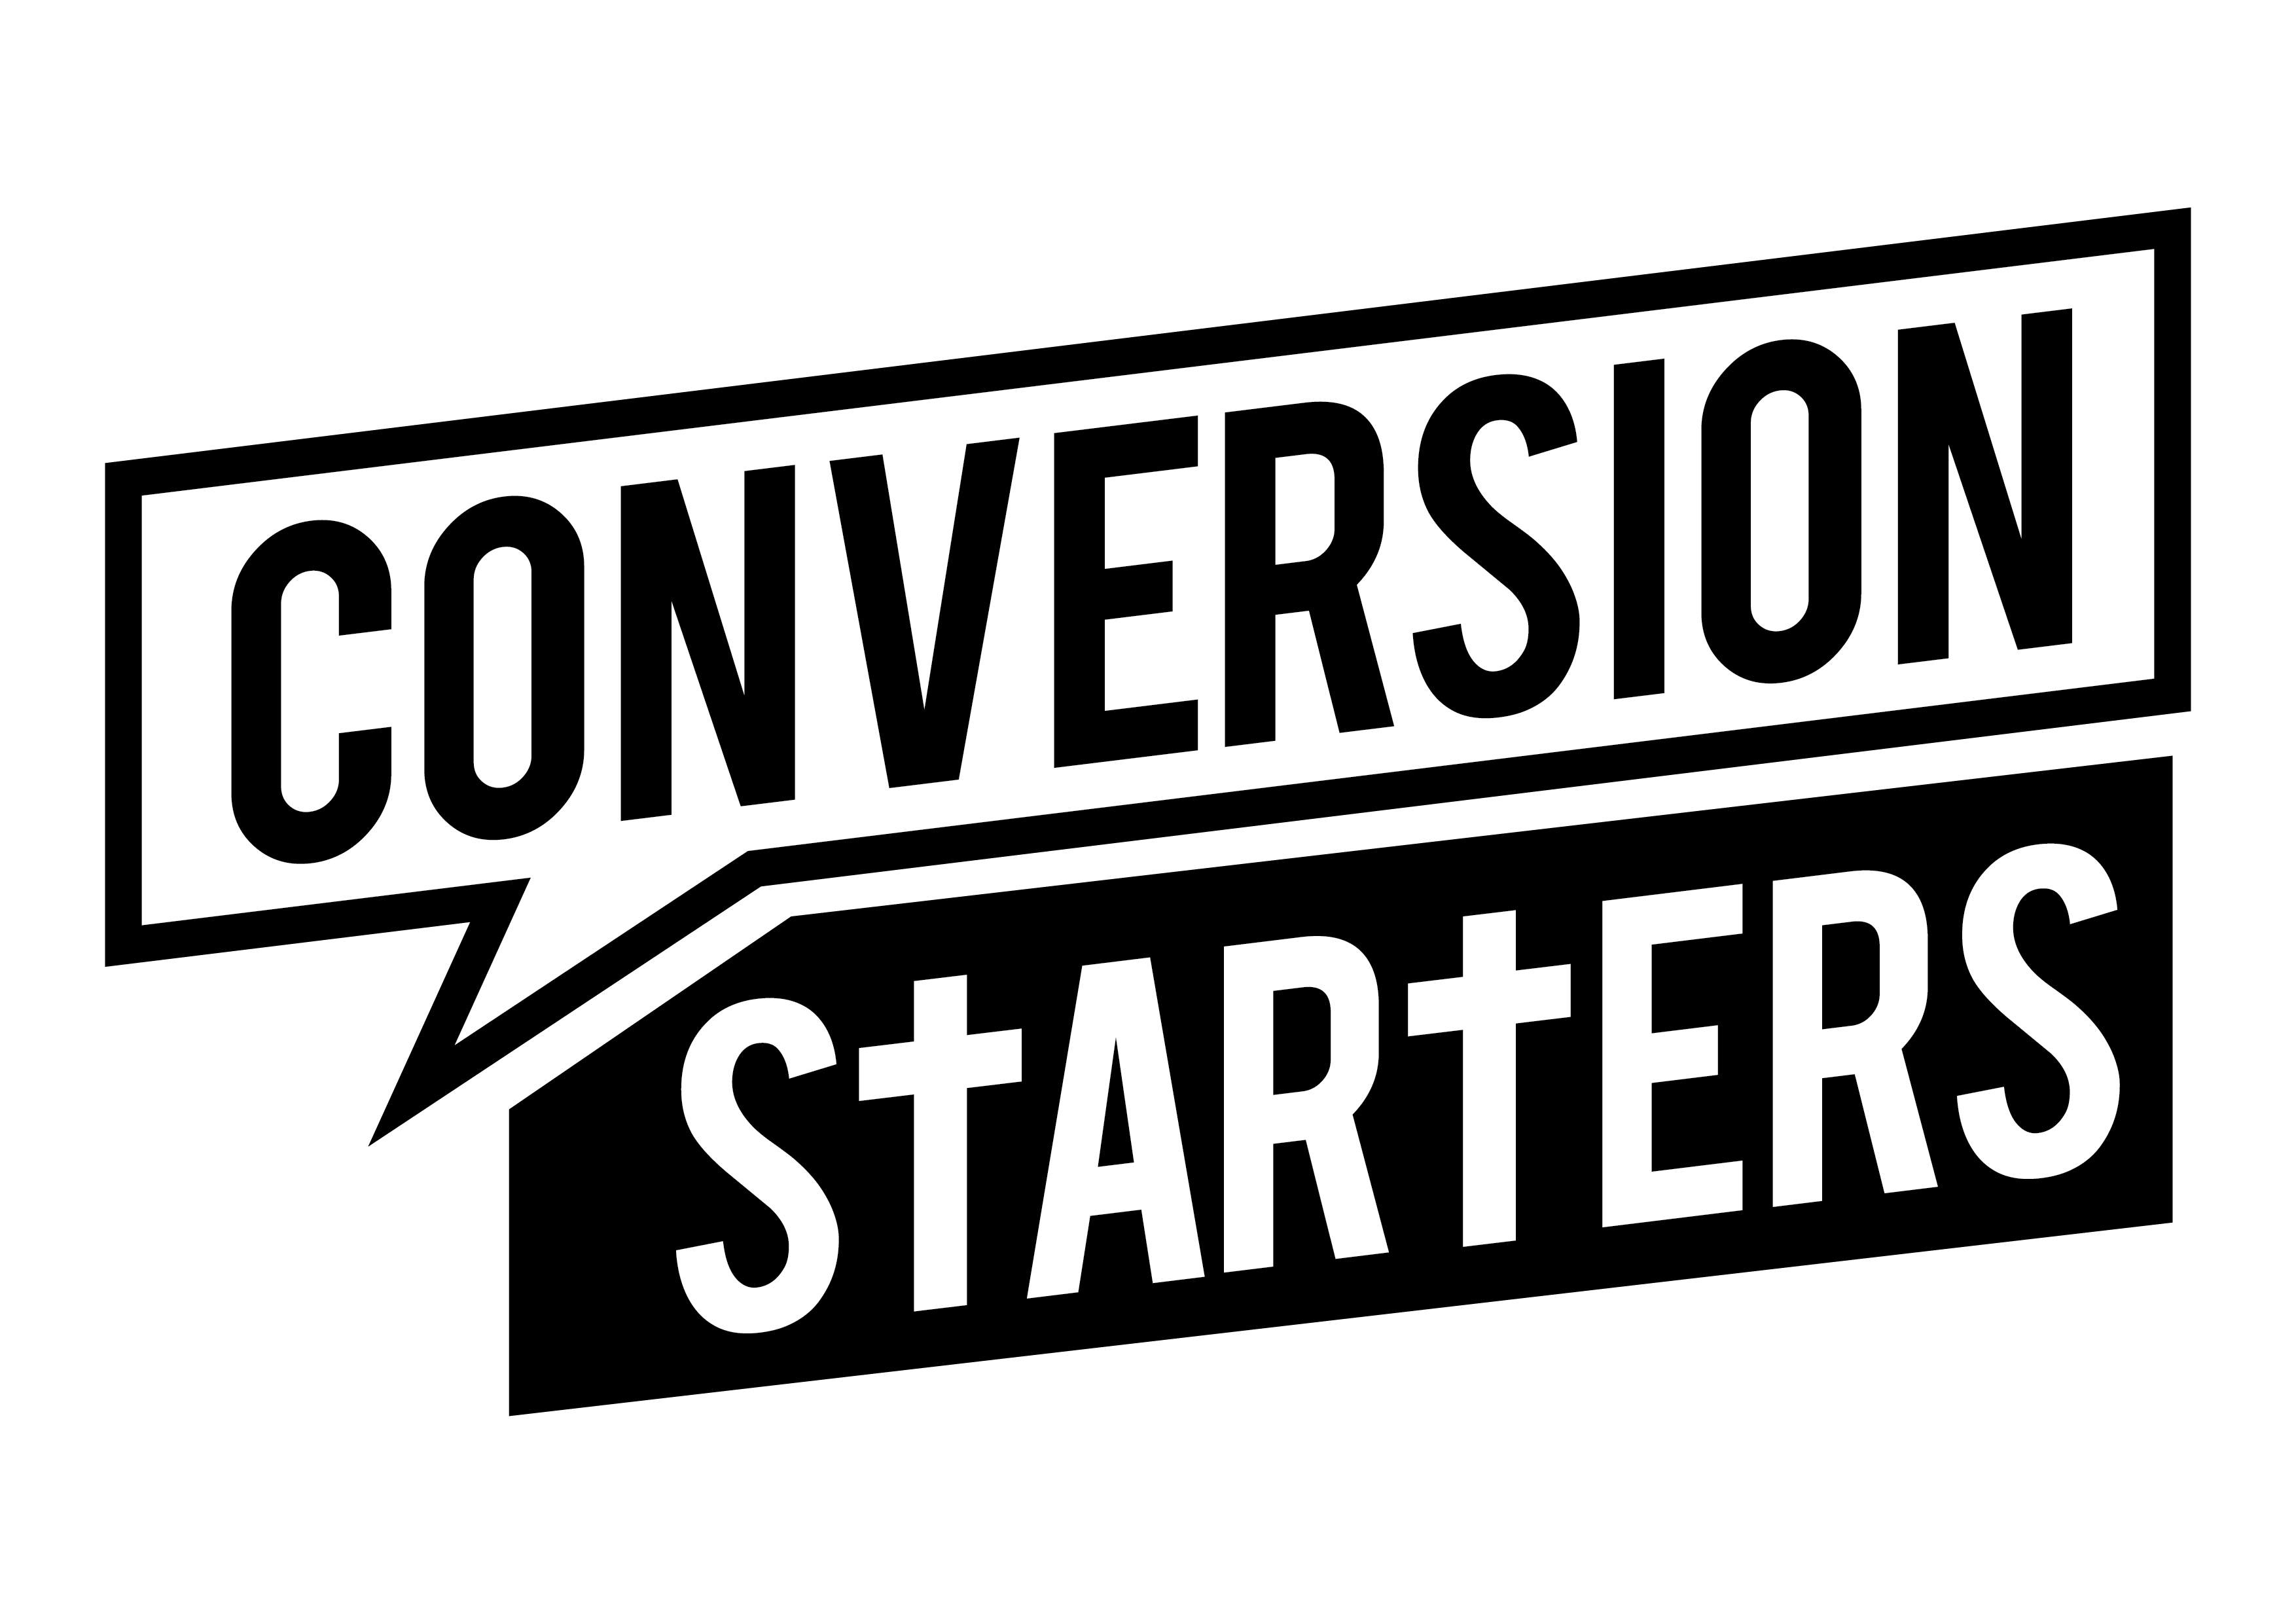 conversionstarters